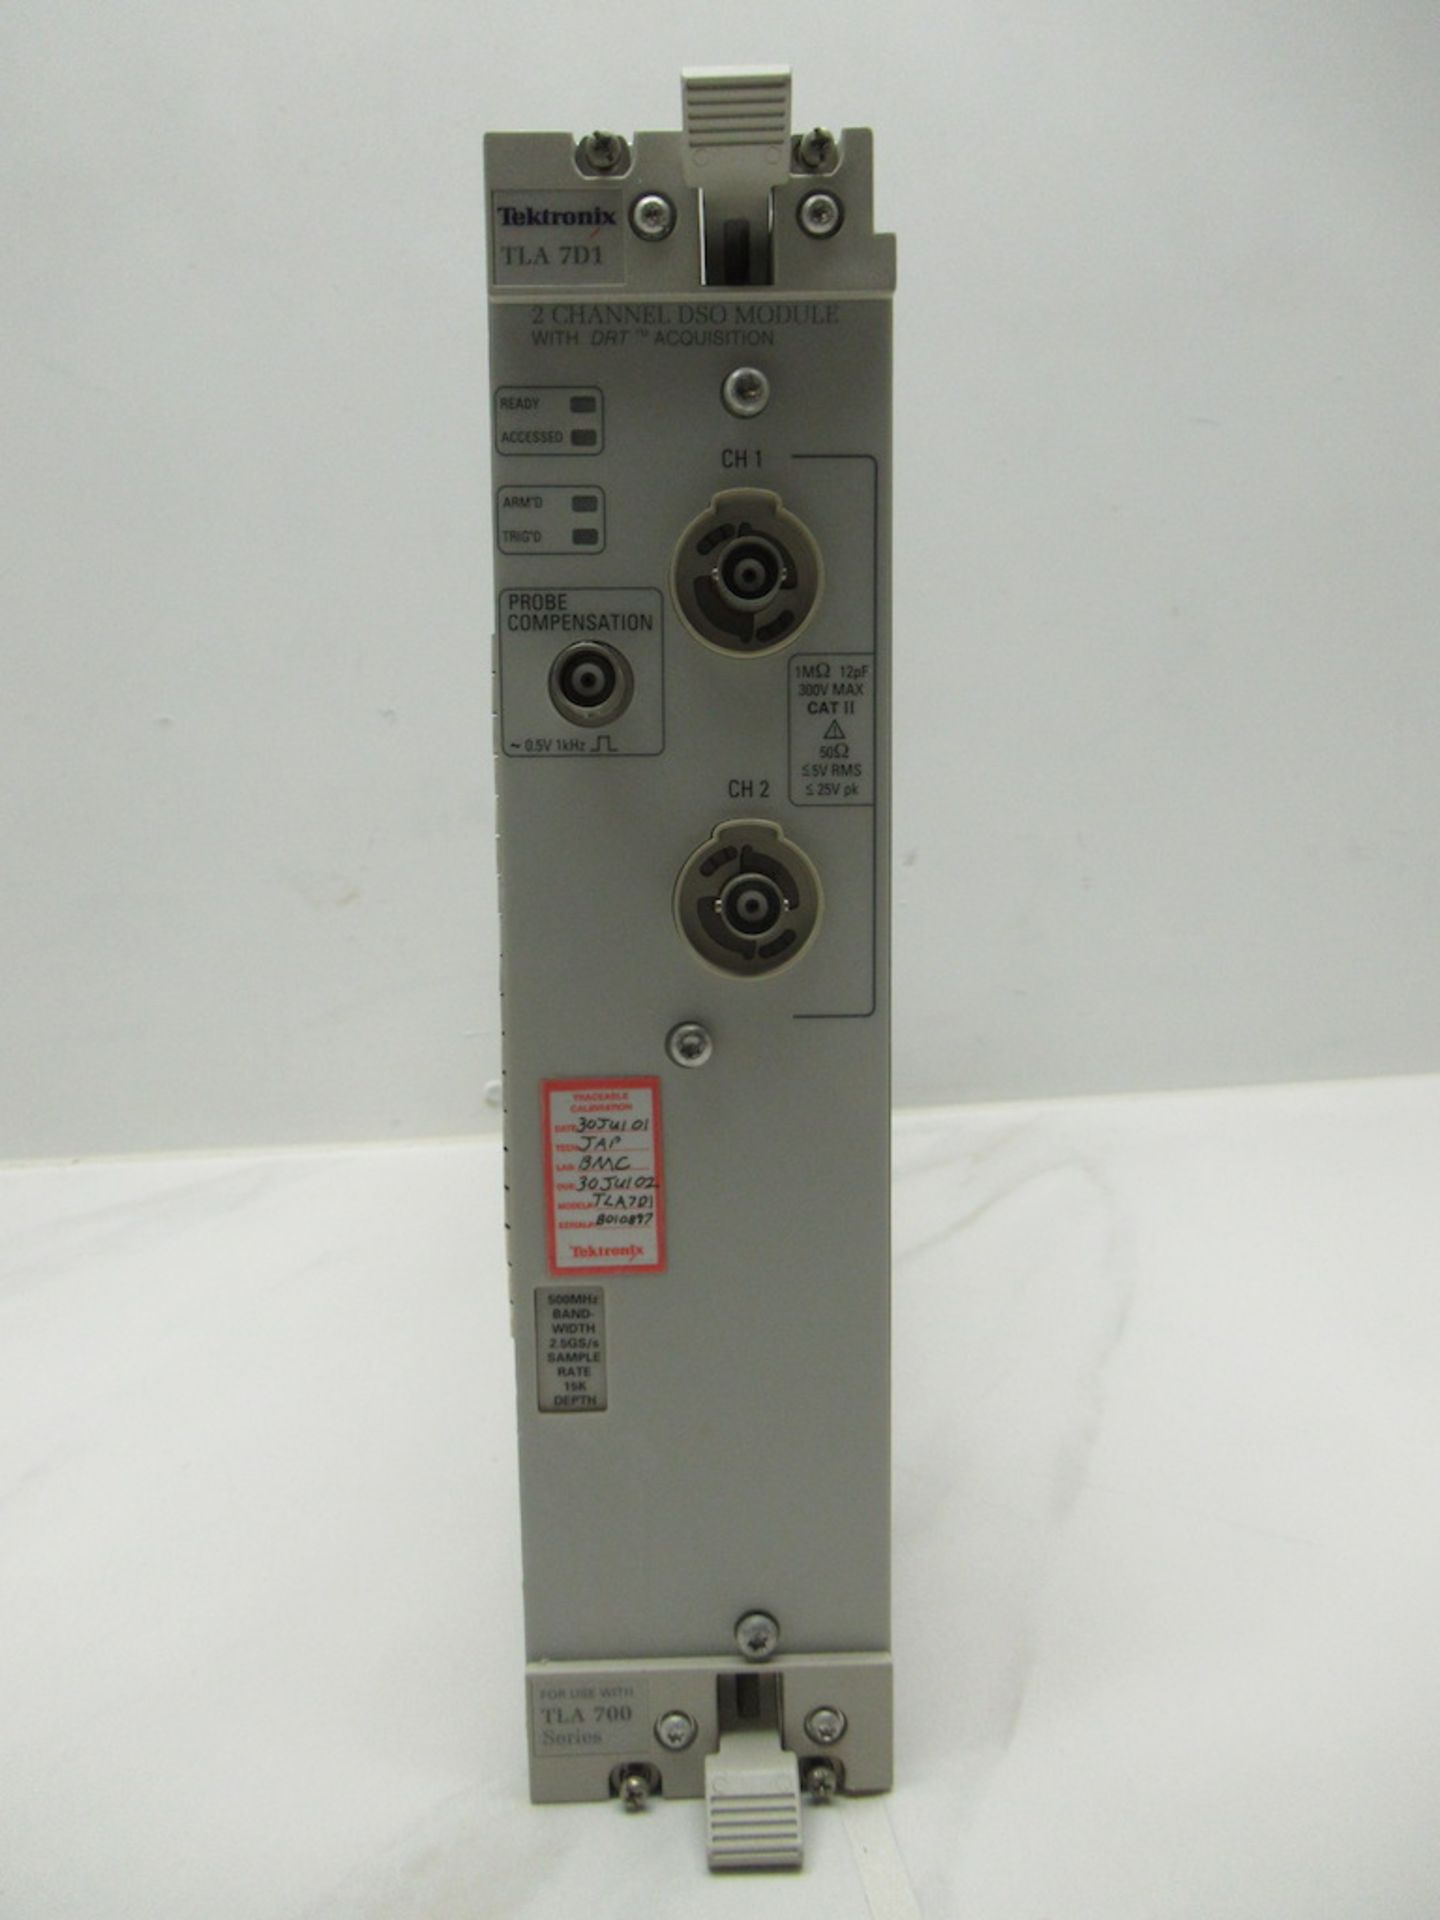 Tektronix Tla 7D1 Dso Module With Drt Acquisition, 2-Channel, 500Mhz, 2.5Gs/S Module - Image 2 of 4